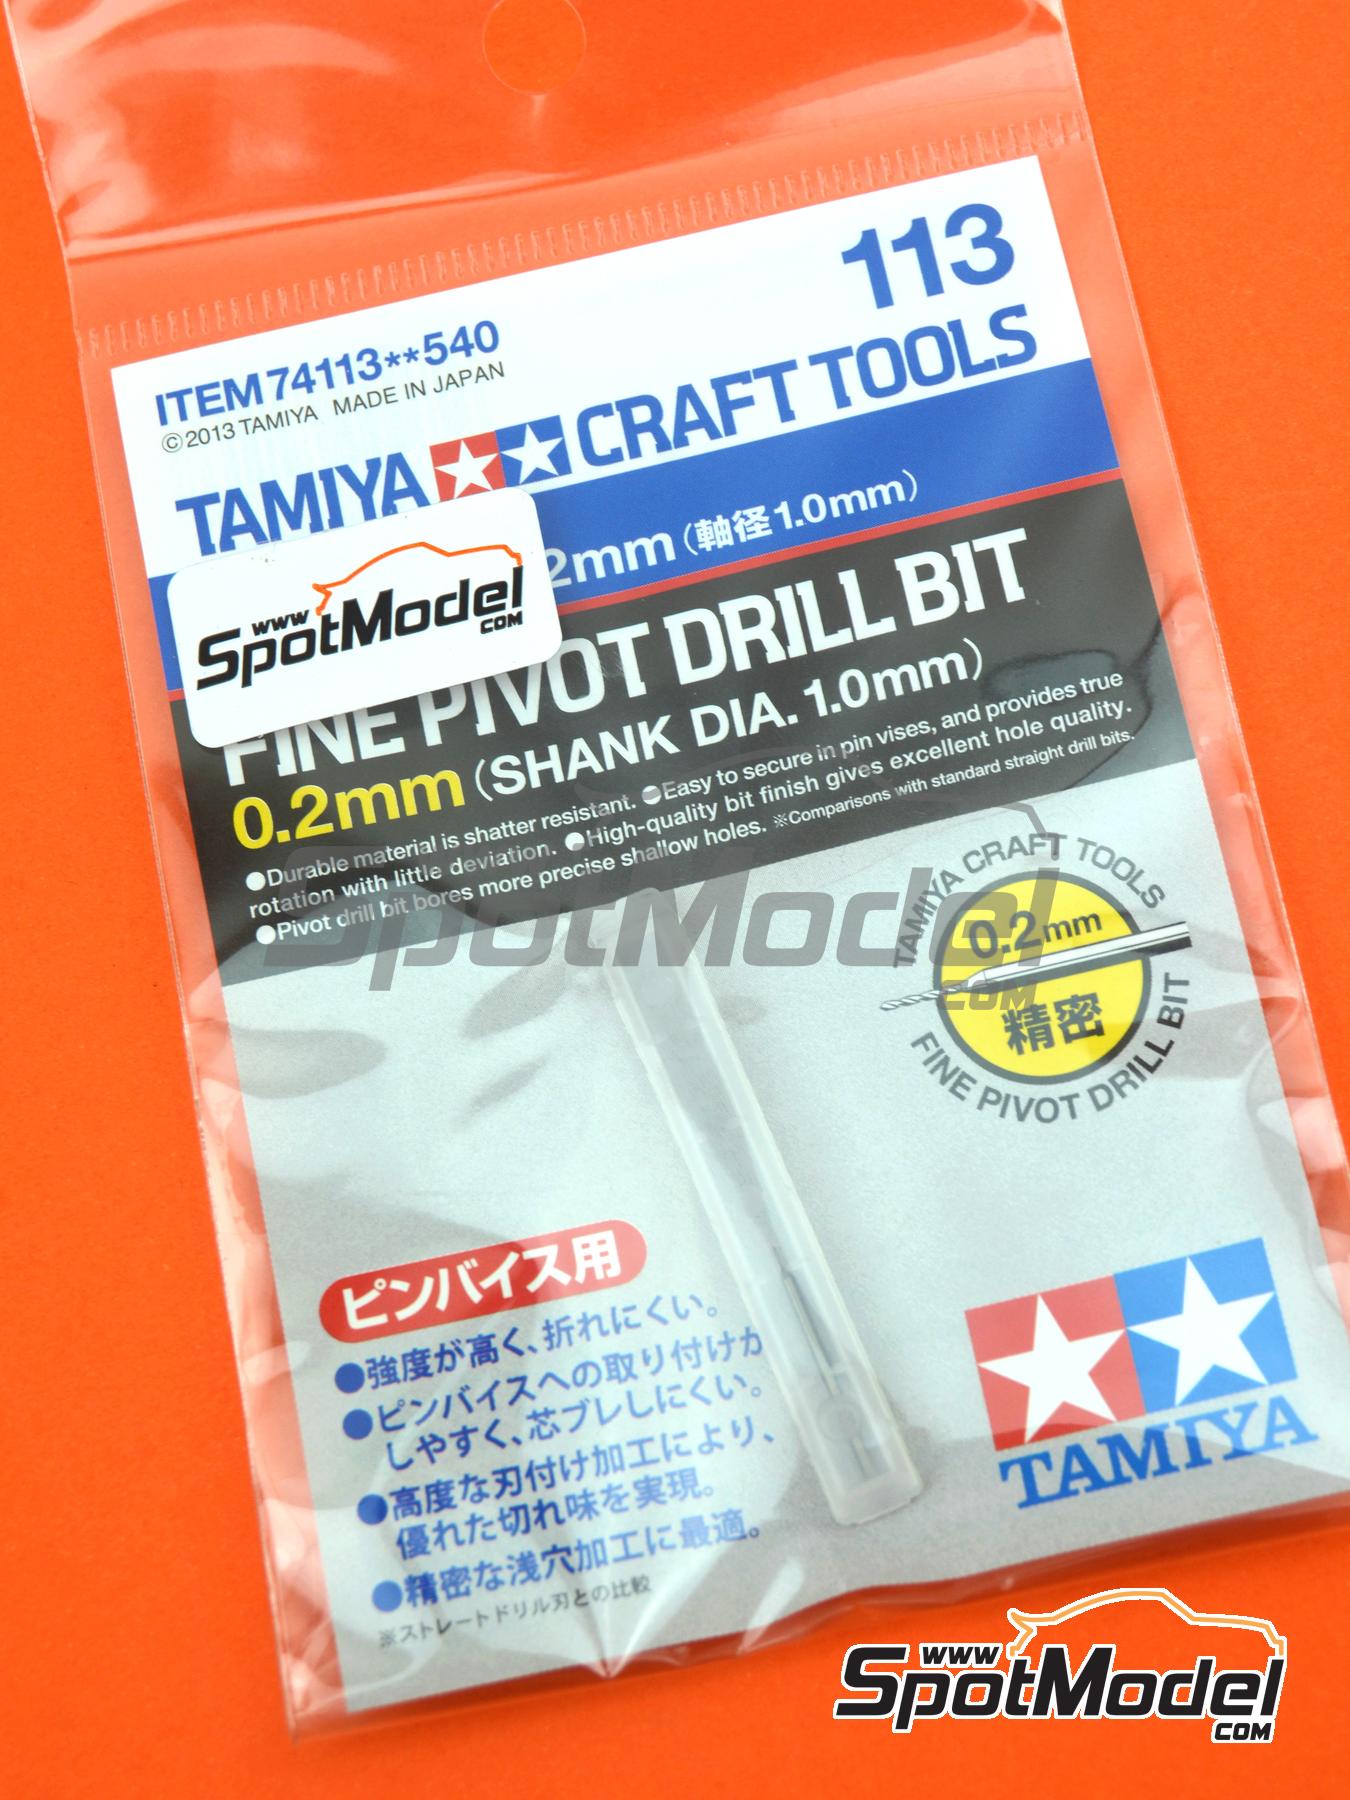 Fine Pivot Drill Bits (Shank Dia. 1.0mm)